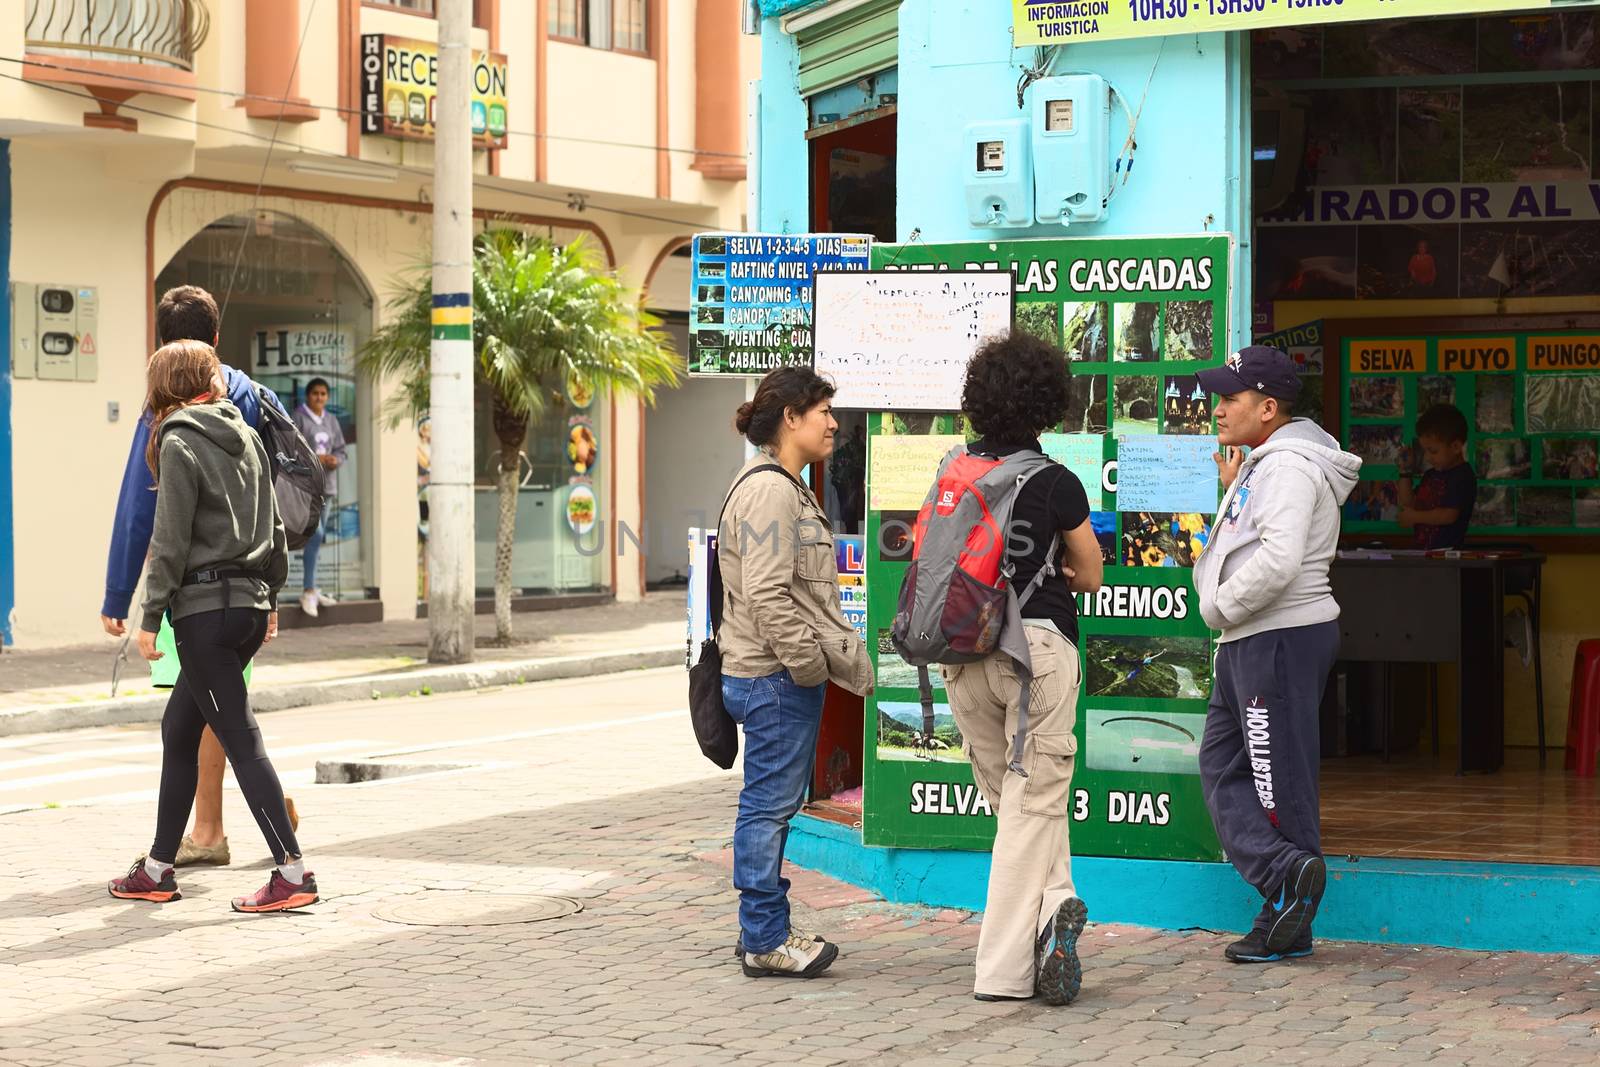 Tour Operator in Banos, Ecuador by ildi